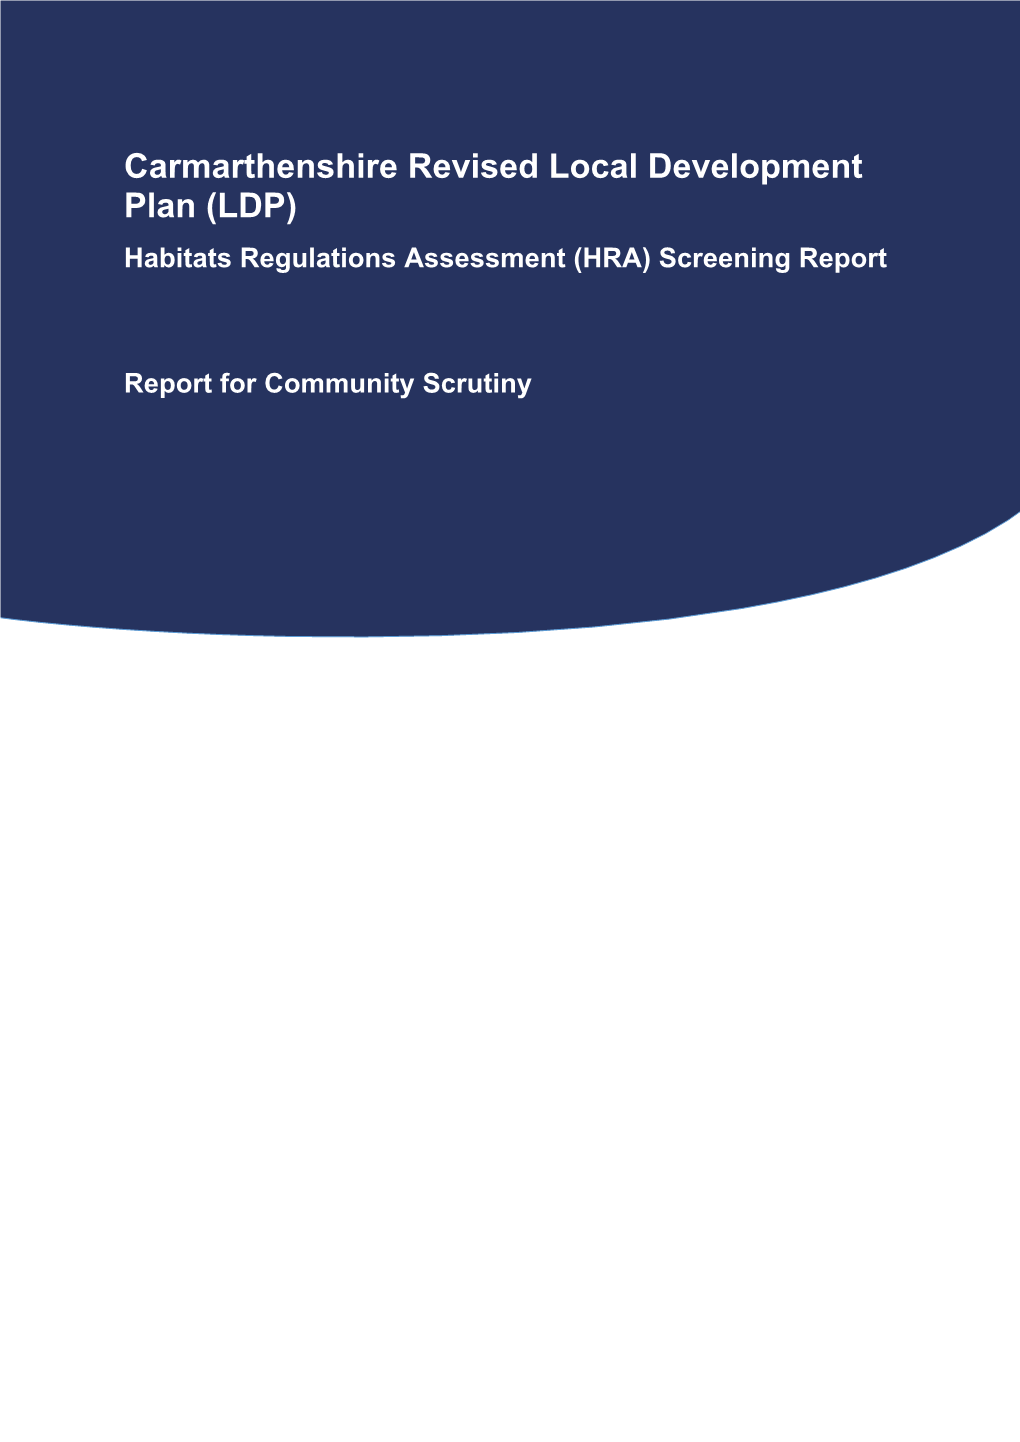 Carmarthenshire Revised Local Development Plan (LDP) Habitats Regulations Assessment (HRA) Screening Report